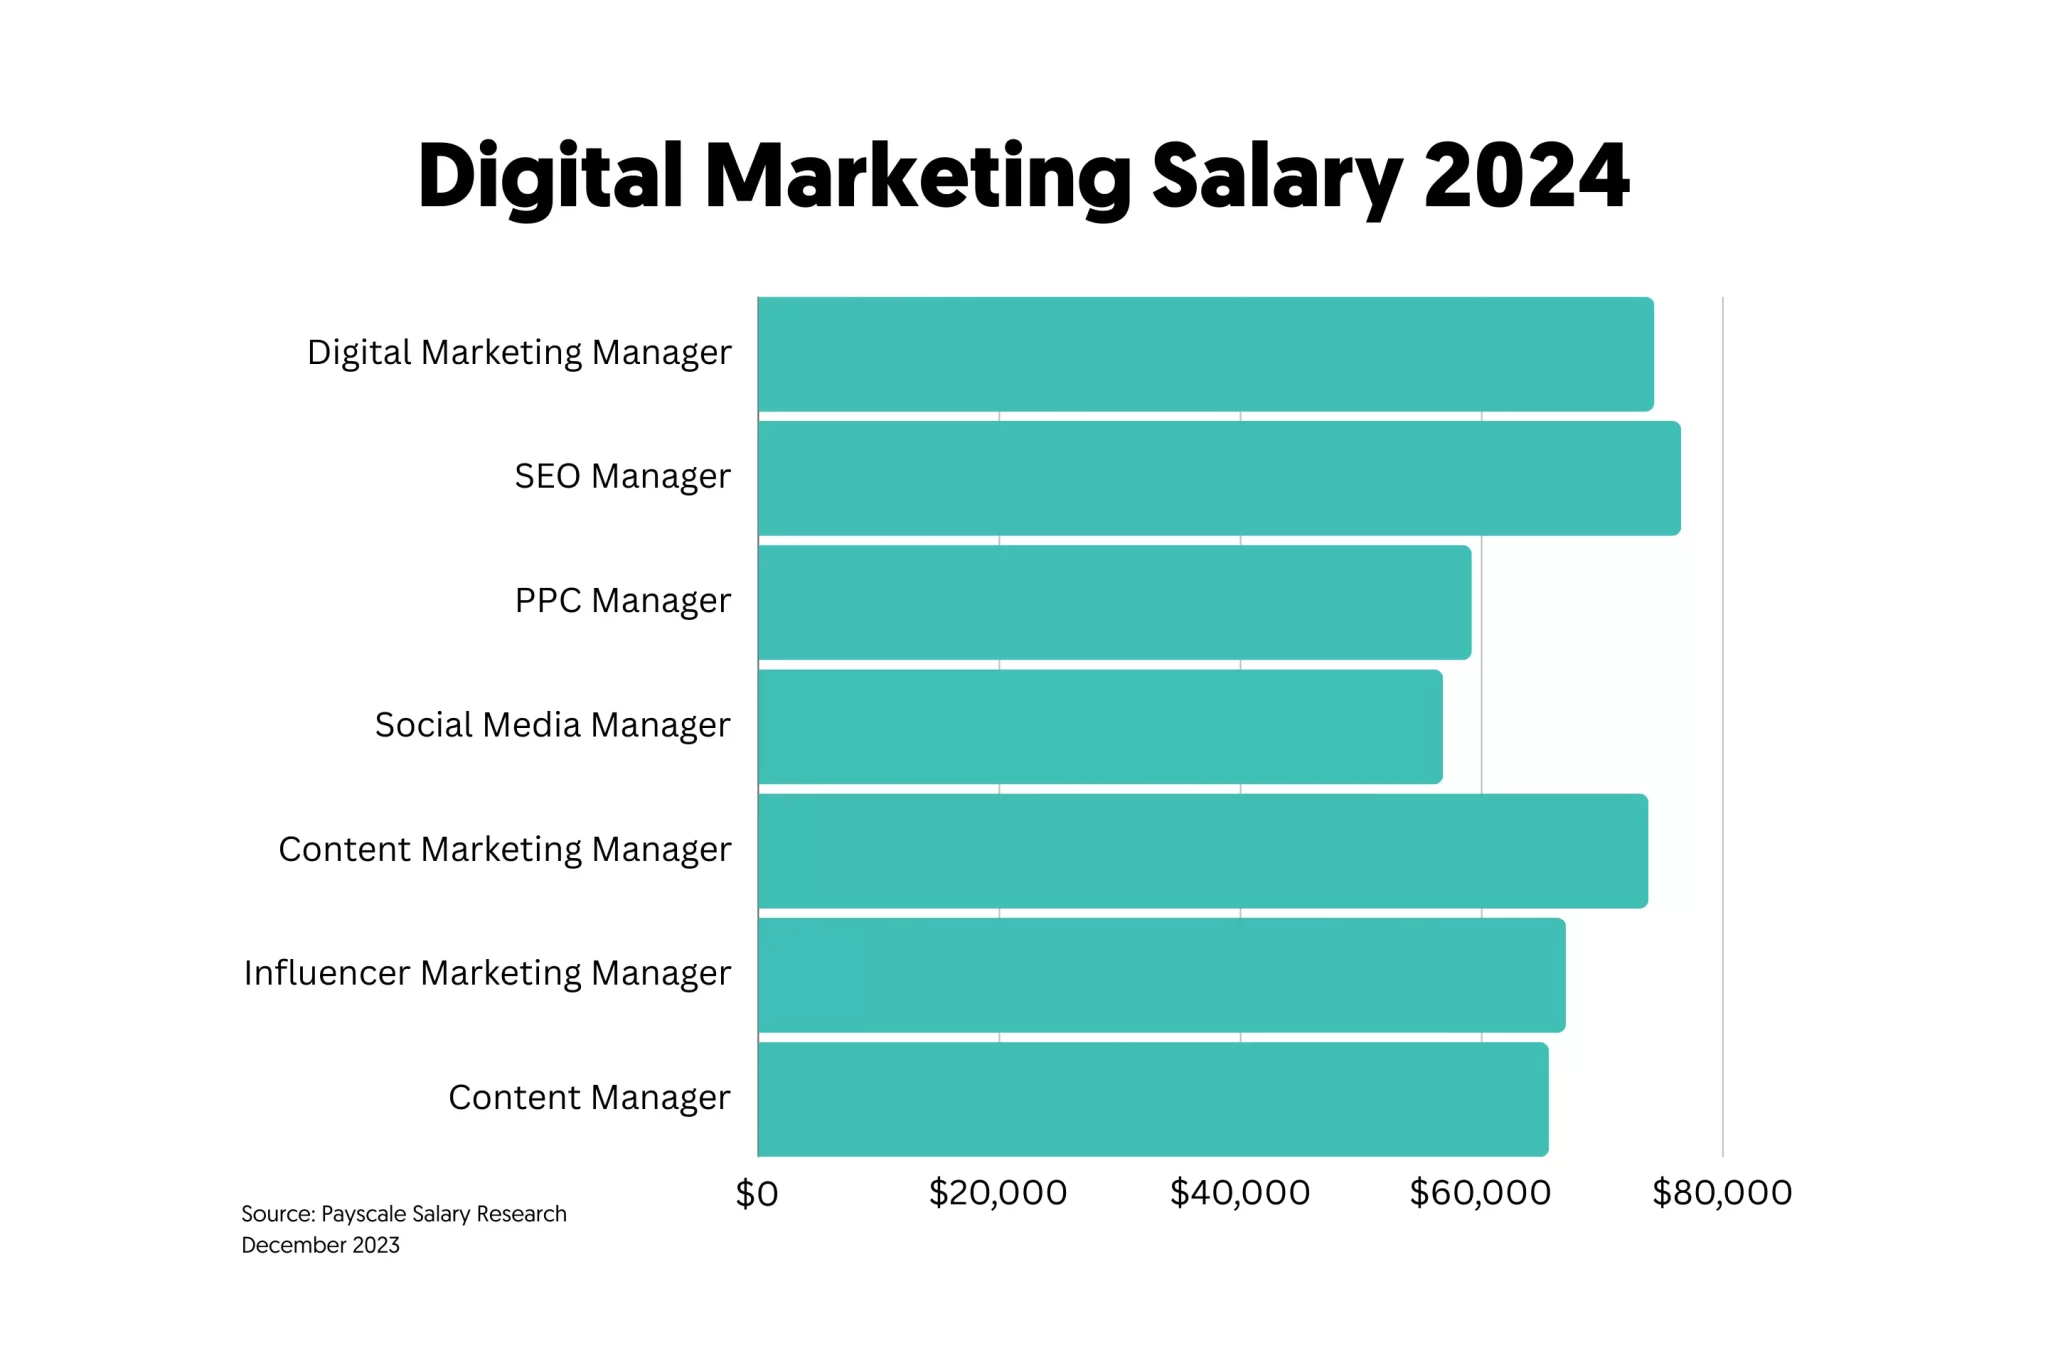 Digital Marketing Salary: How Much Do Digital Marketers Make 2024